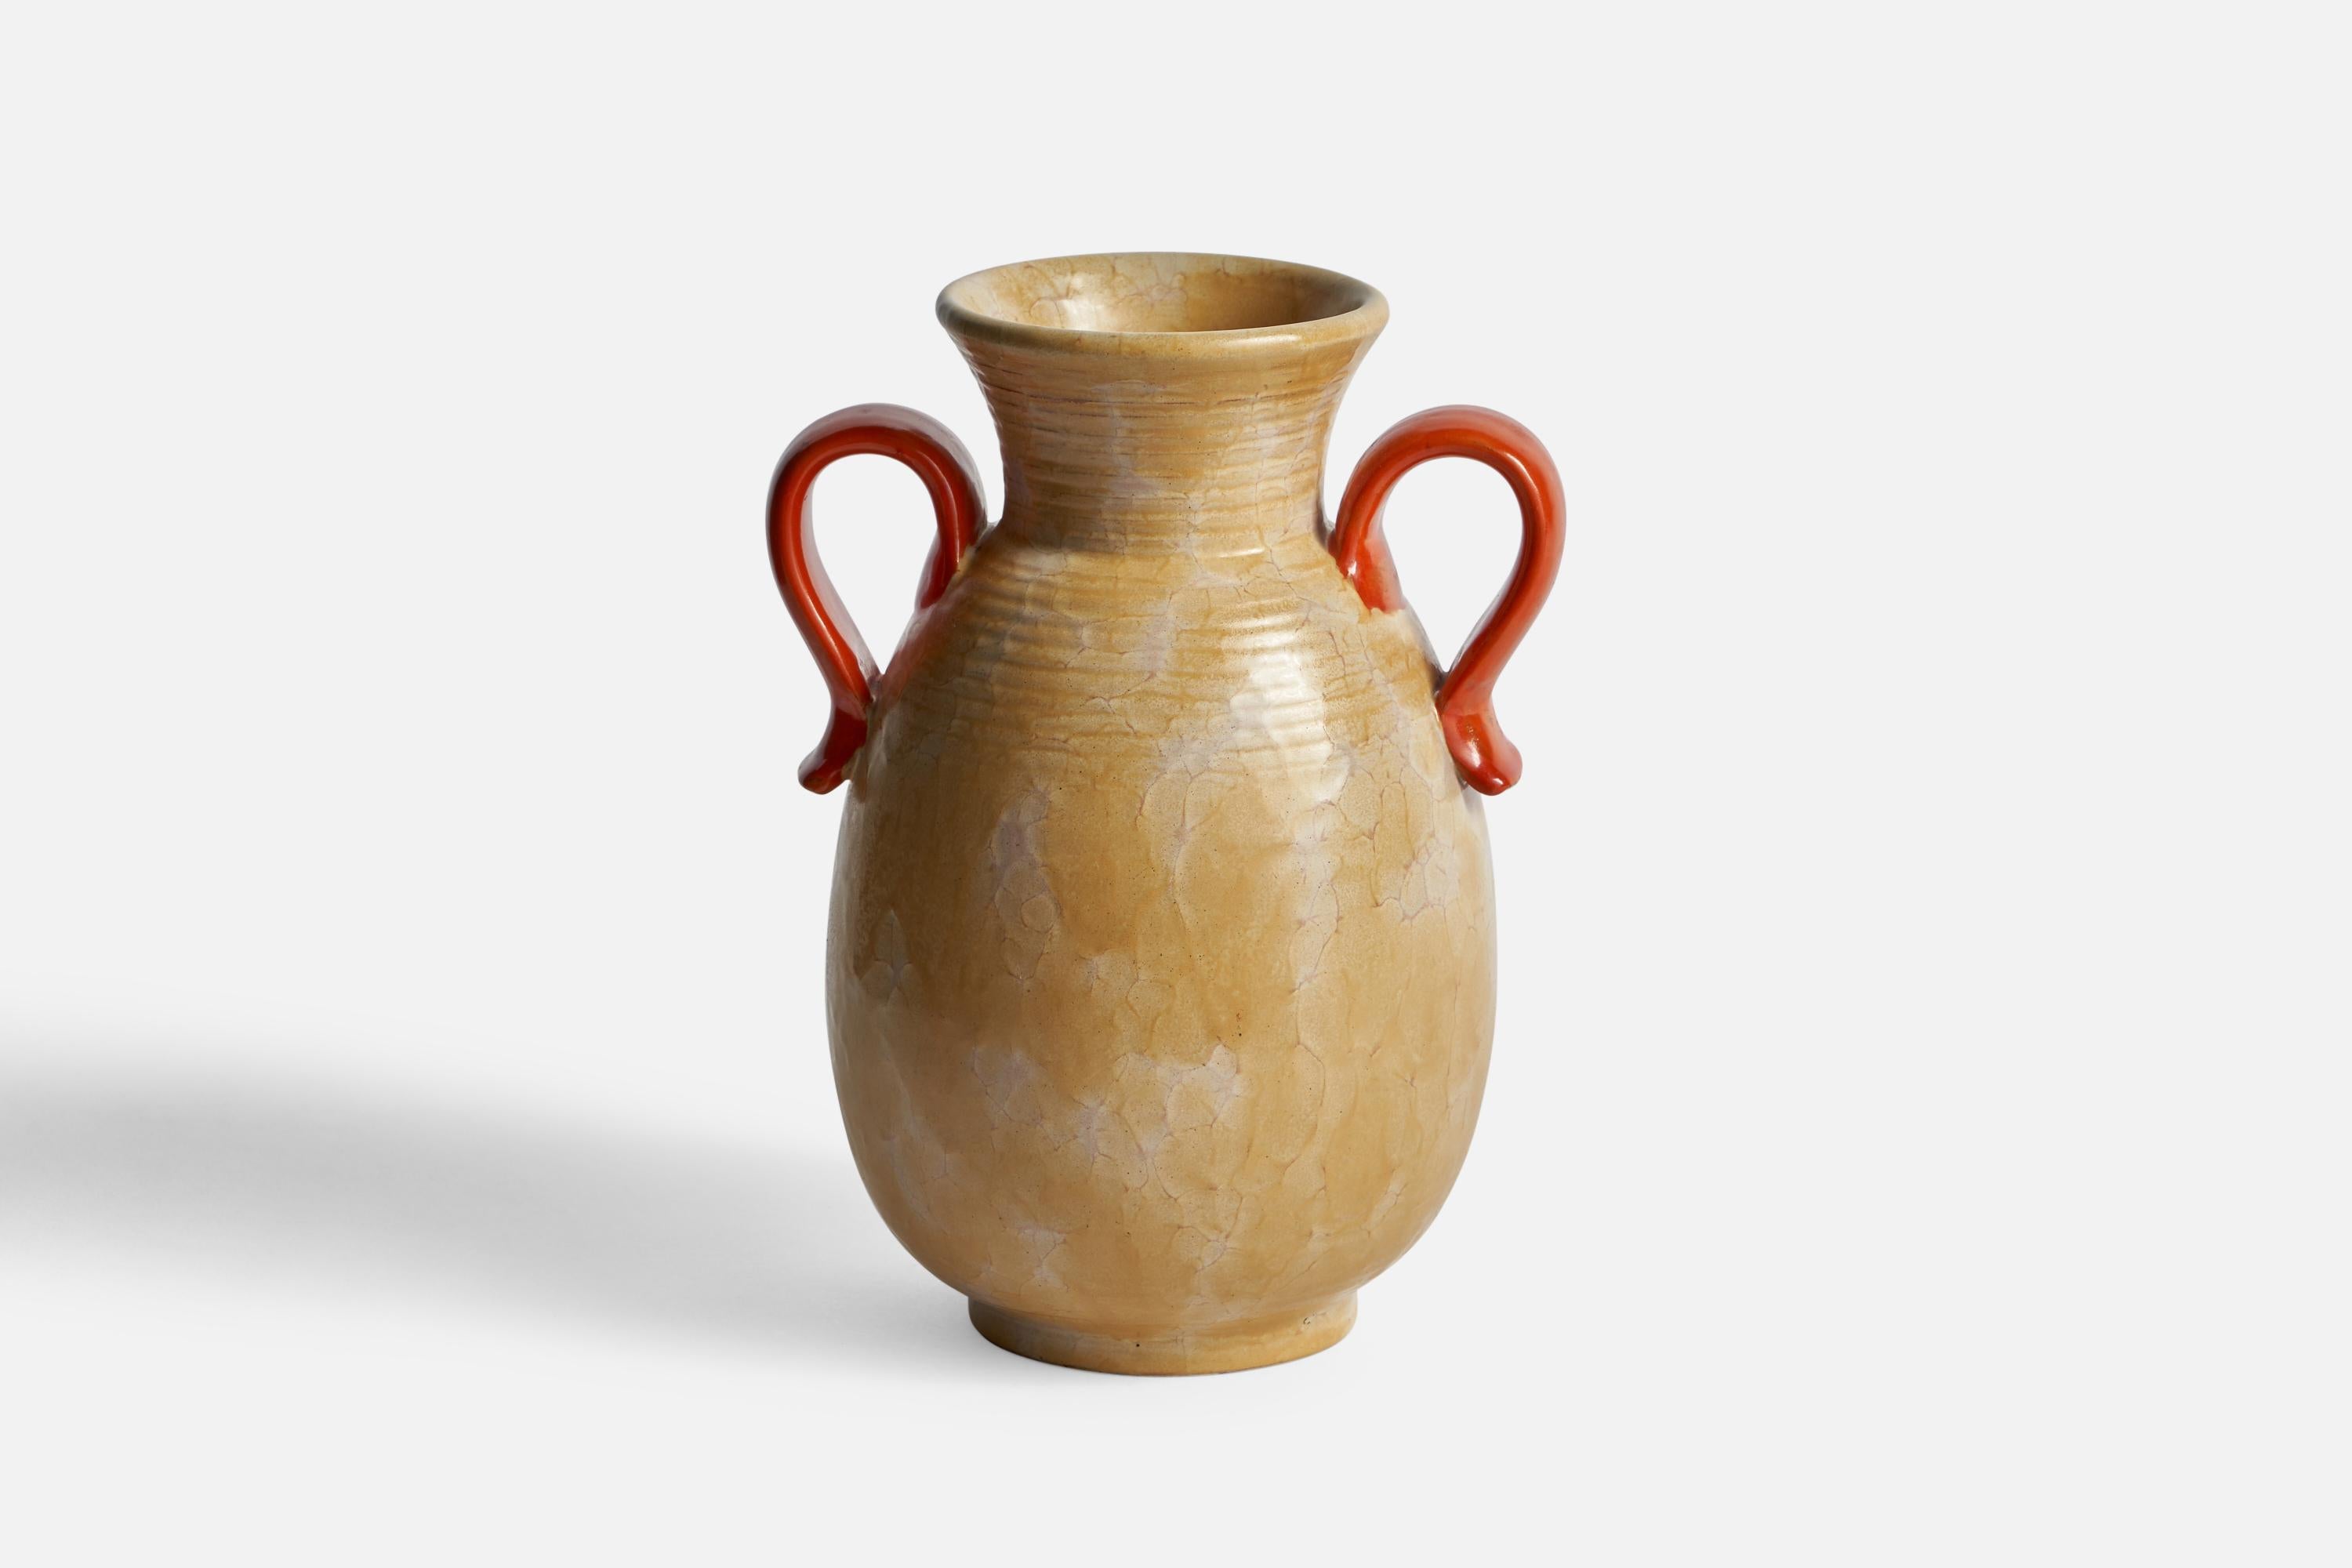 An orange and beige glazed earthenware vase designed and produced by Upsala Ekeby, Sweden, c. 1930s